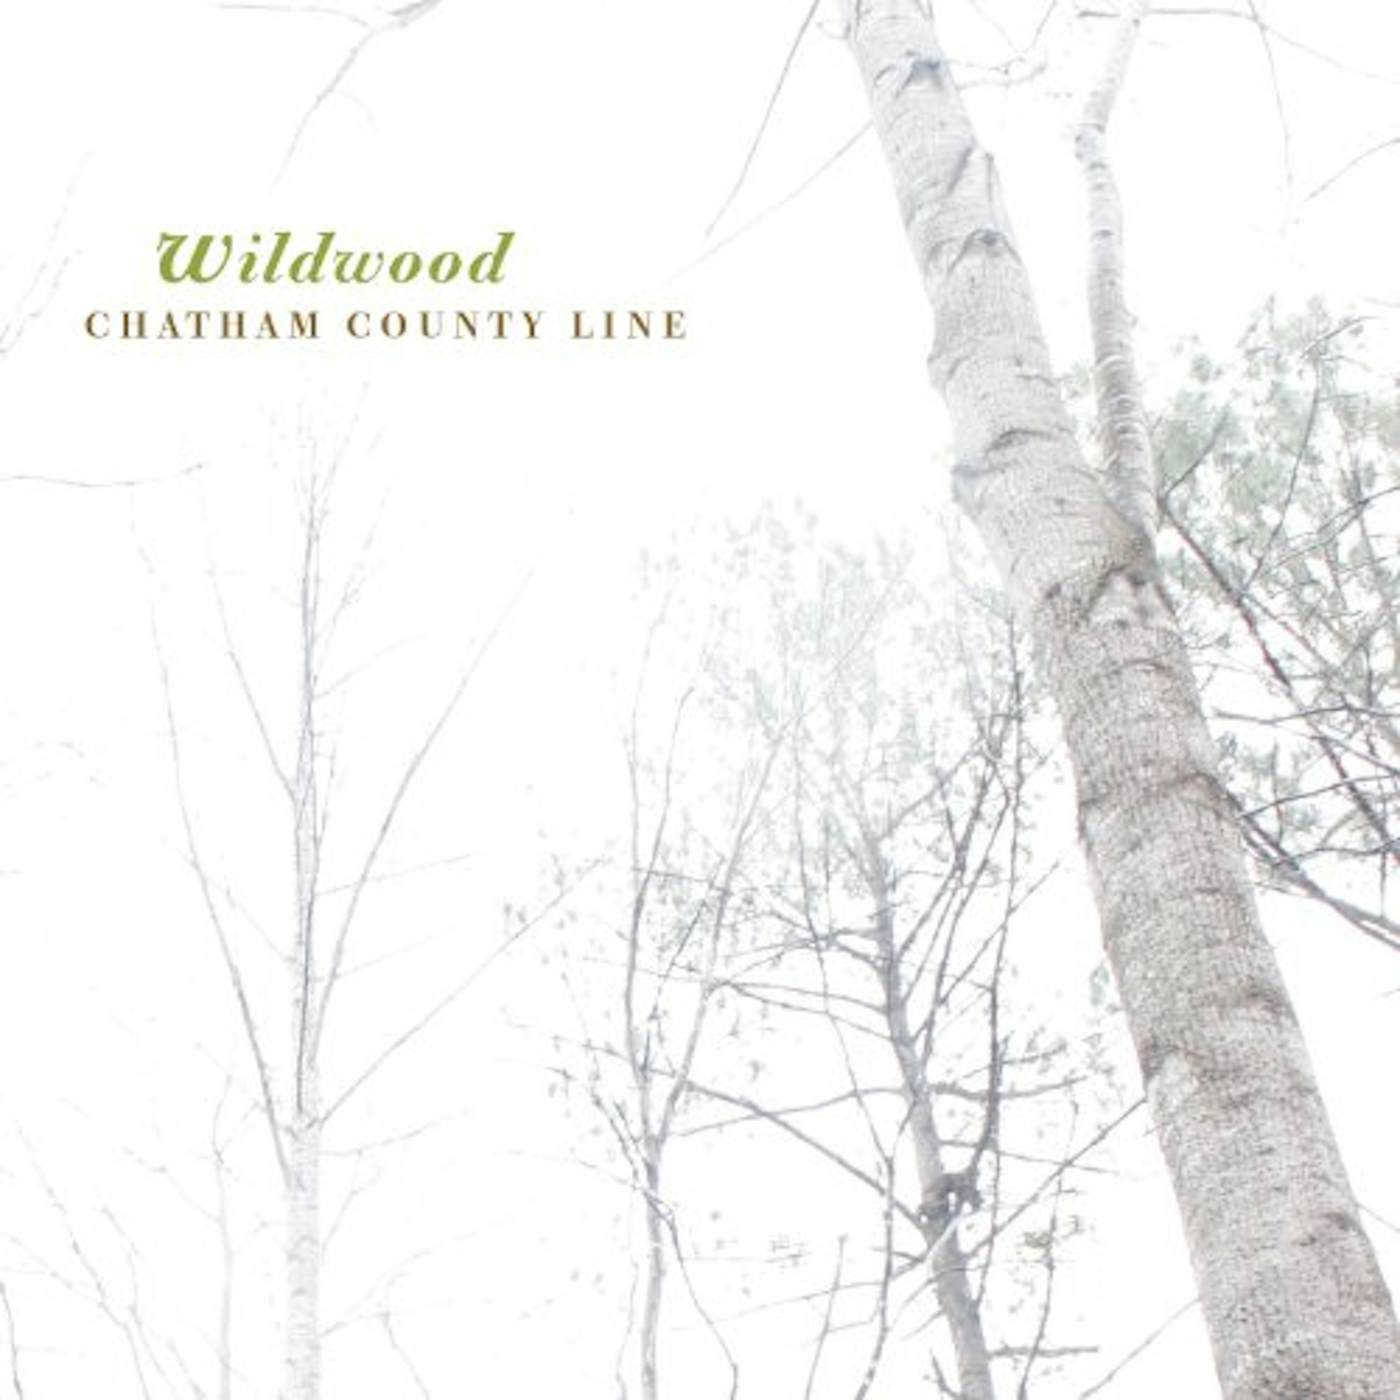 Chatham County Line WILDWOOD CD